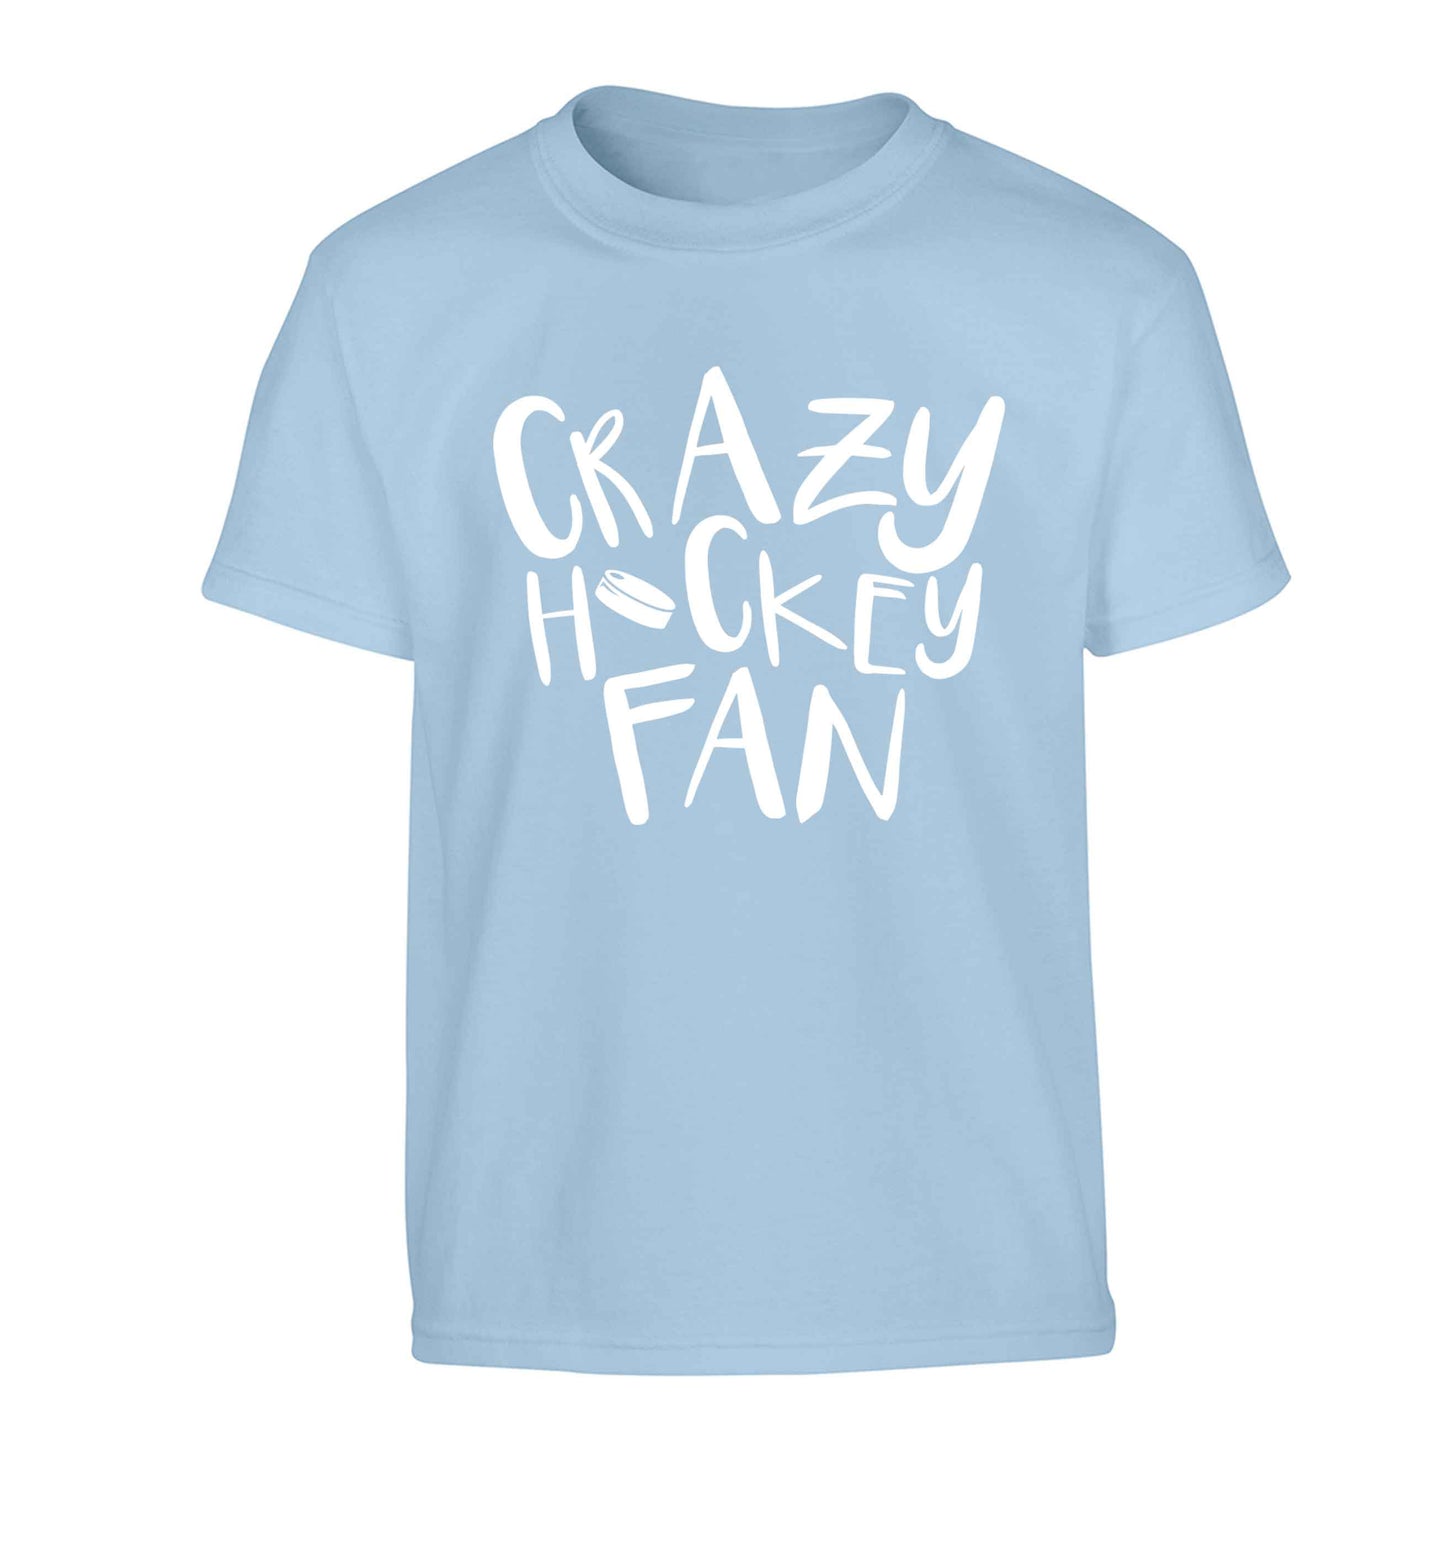 Crazy hockey fan Children's light blue Tshirt 12-13 Years